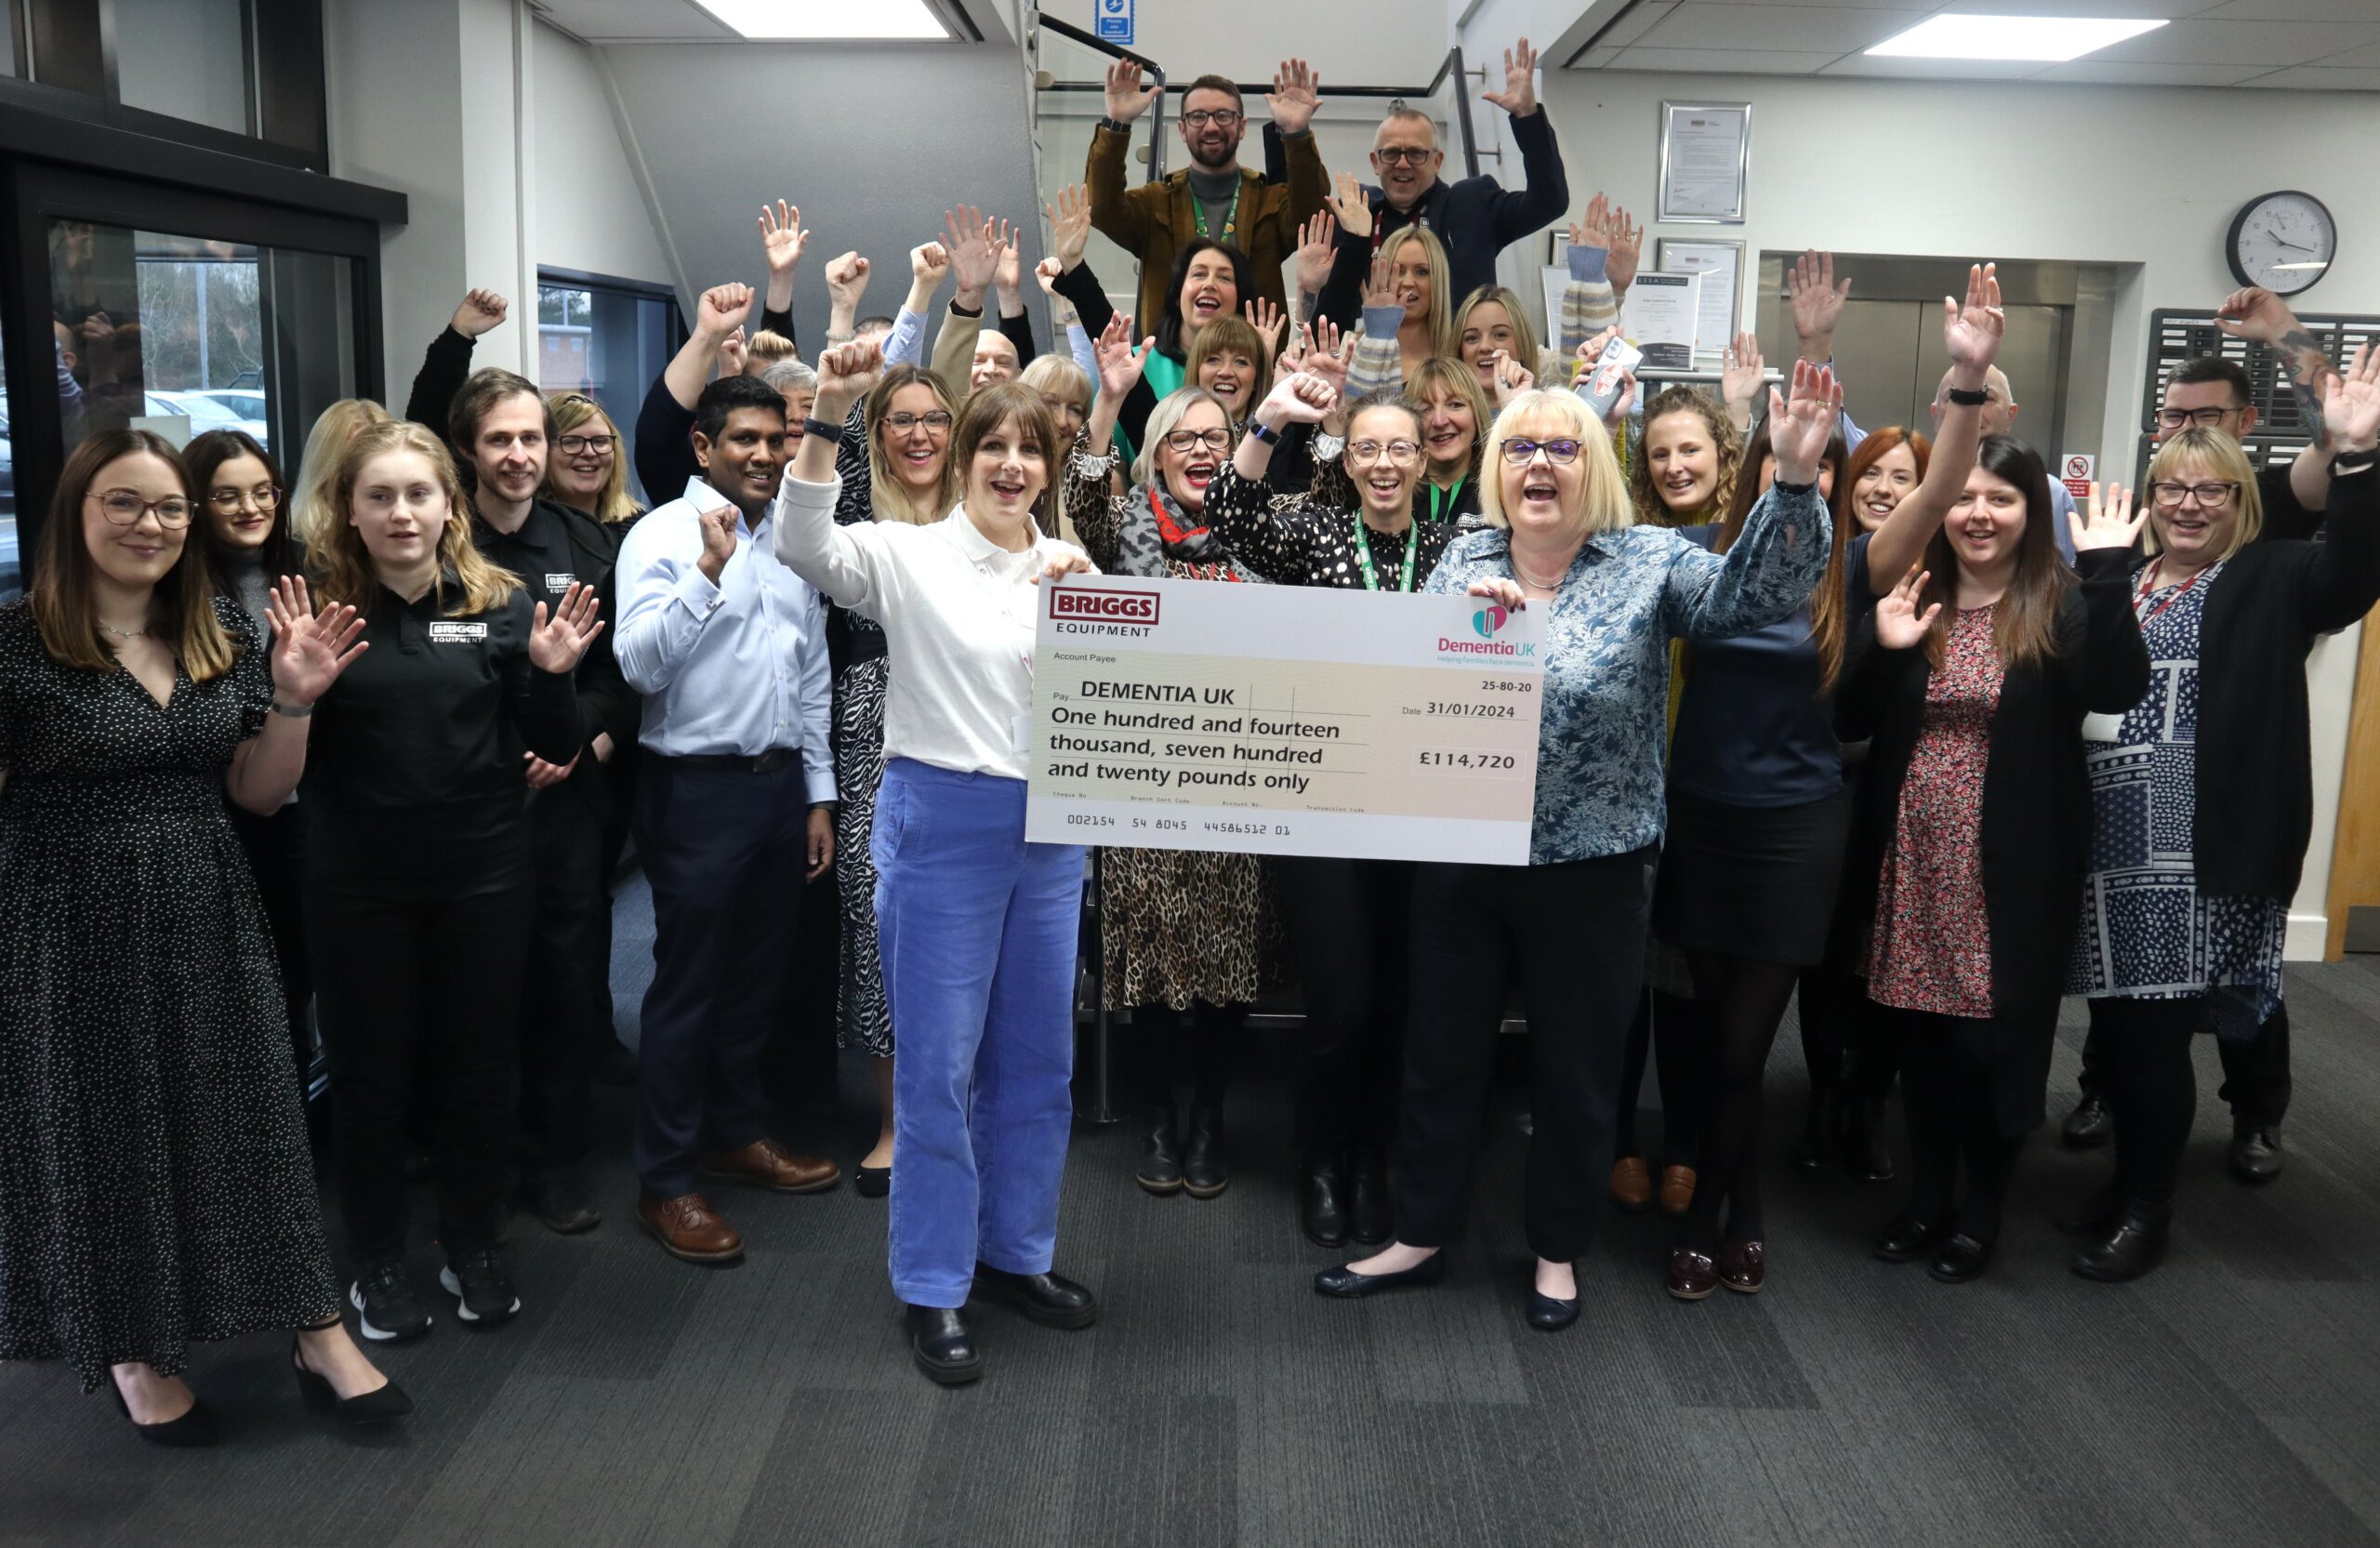 Briggs Equipment team raise £114,720 for Dementia UK charity